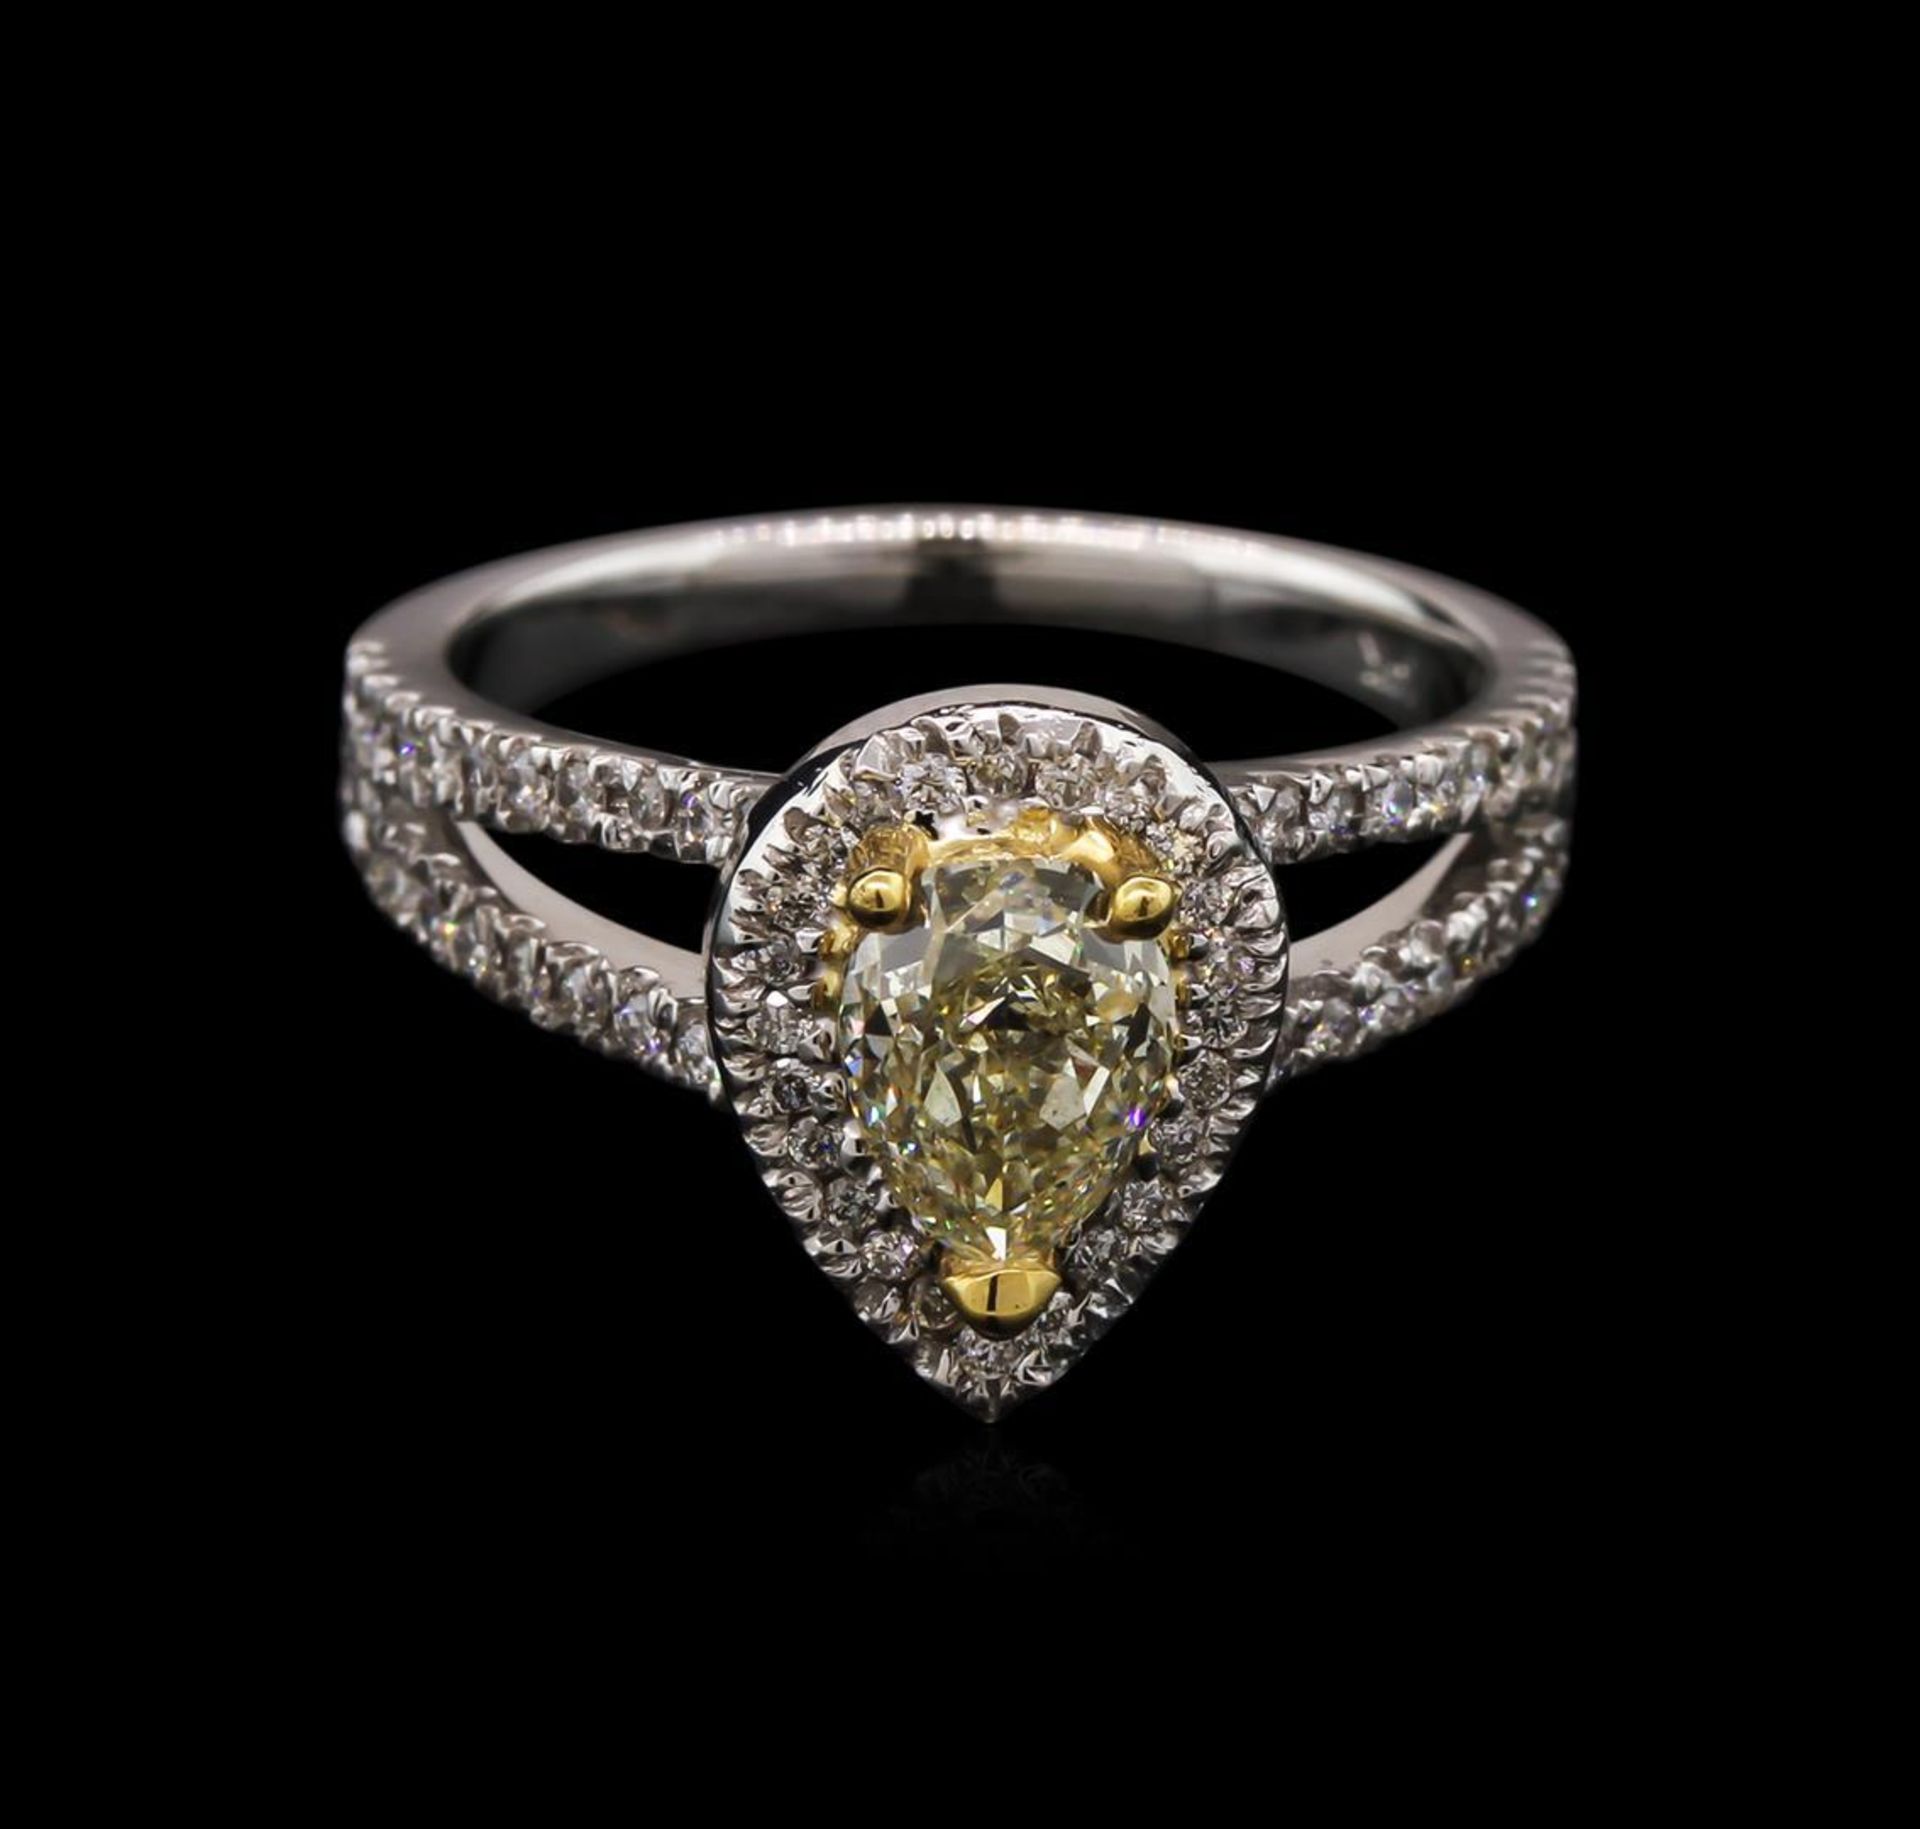 1.42 ctw Light Yellow Diamond Ring - 14KT White Gold - Image 2 of 3